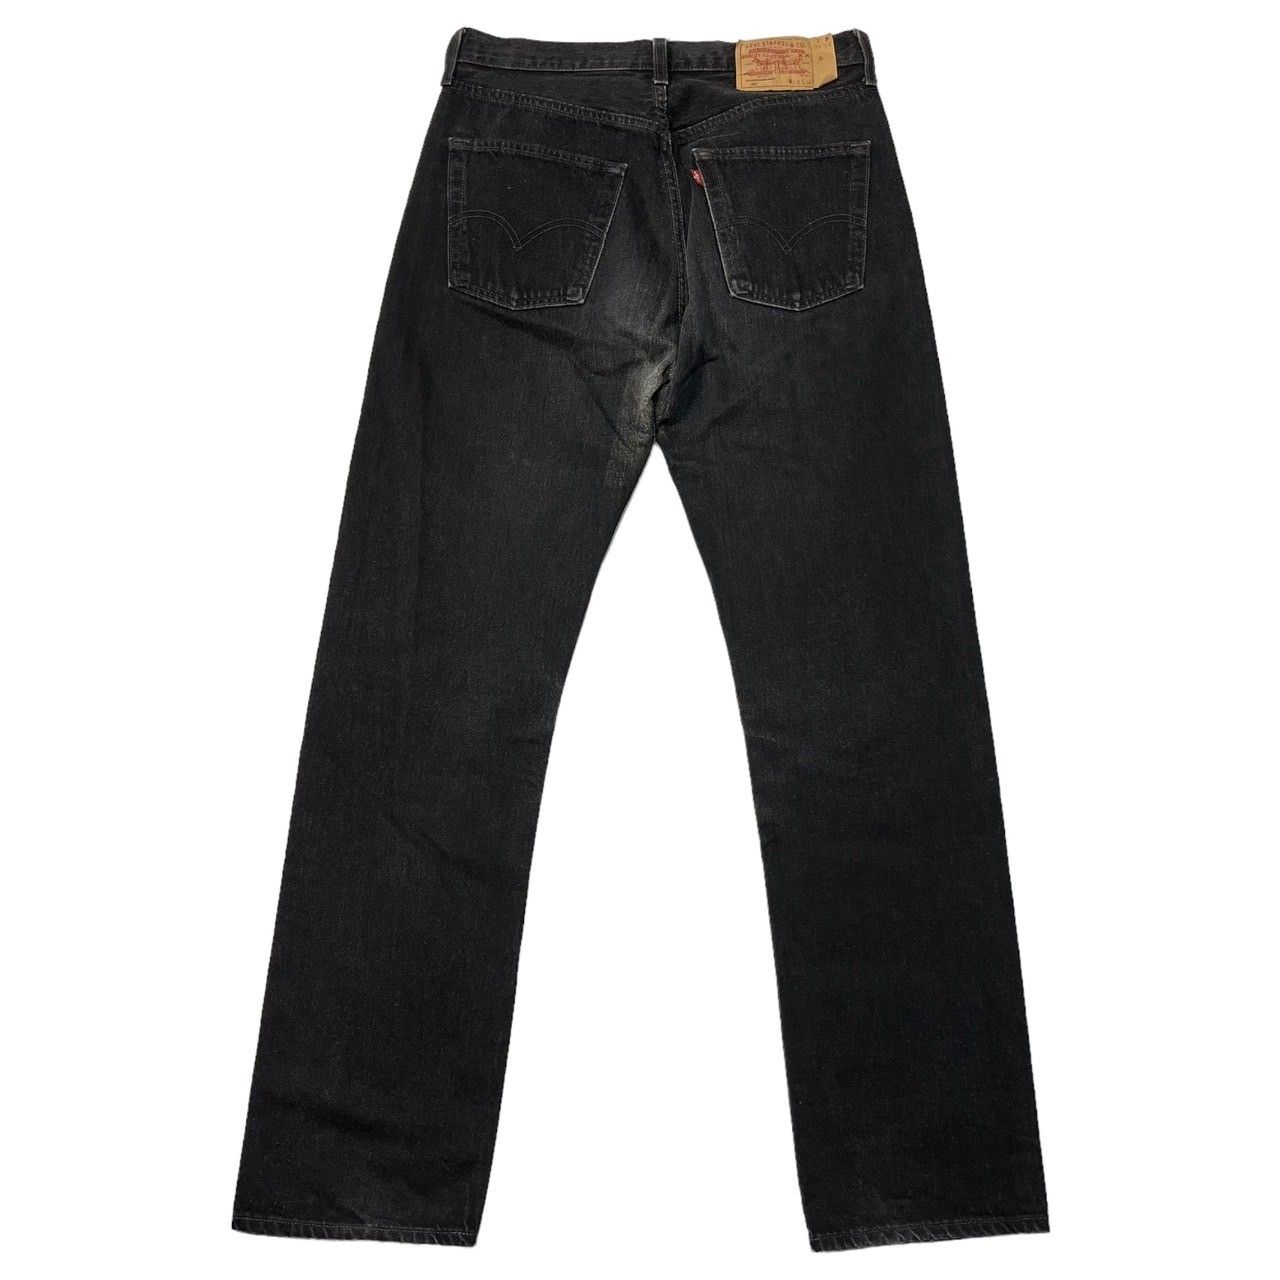 Levi's(リーバイス) 90's 501 black denim pants ブラック デニム ...